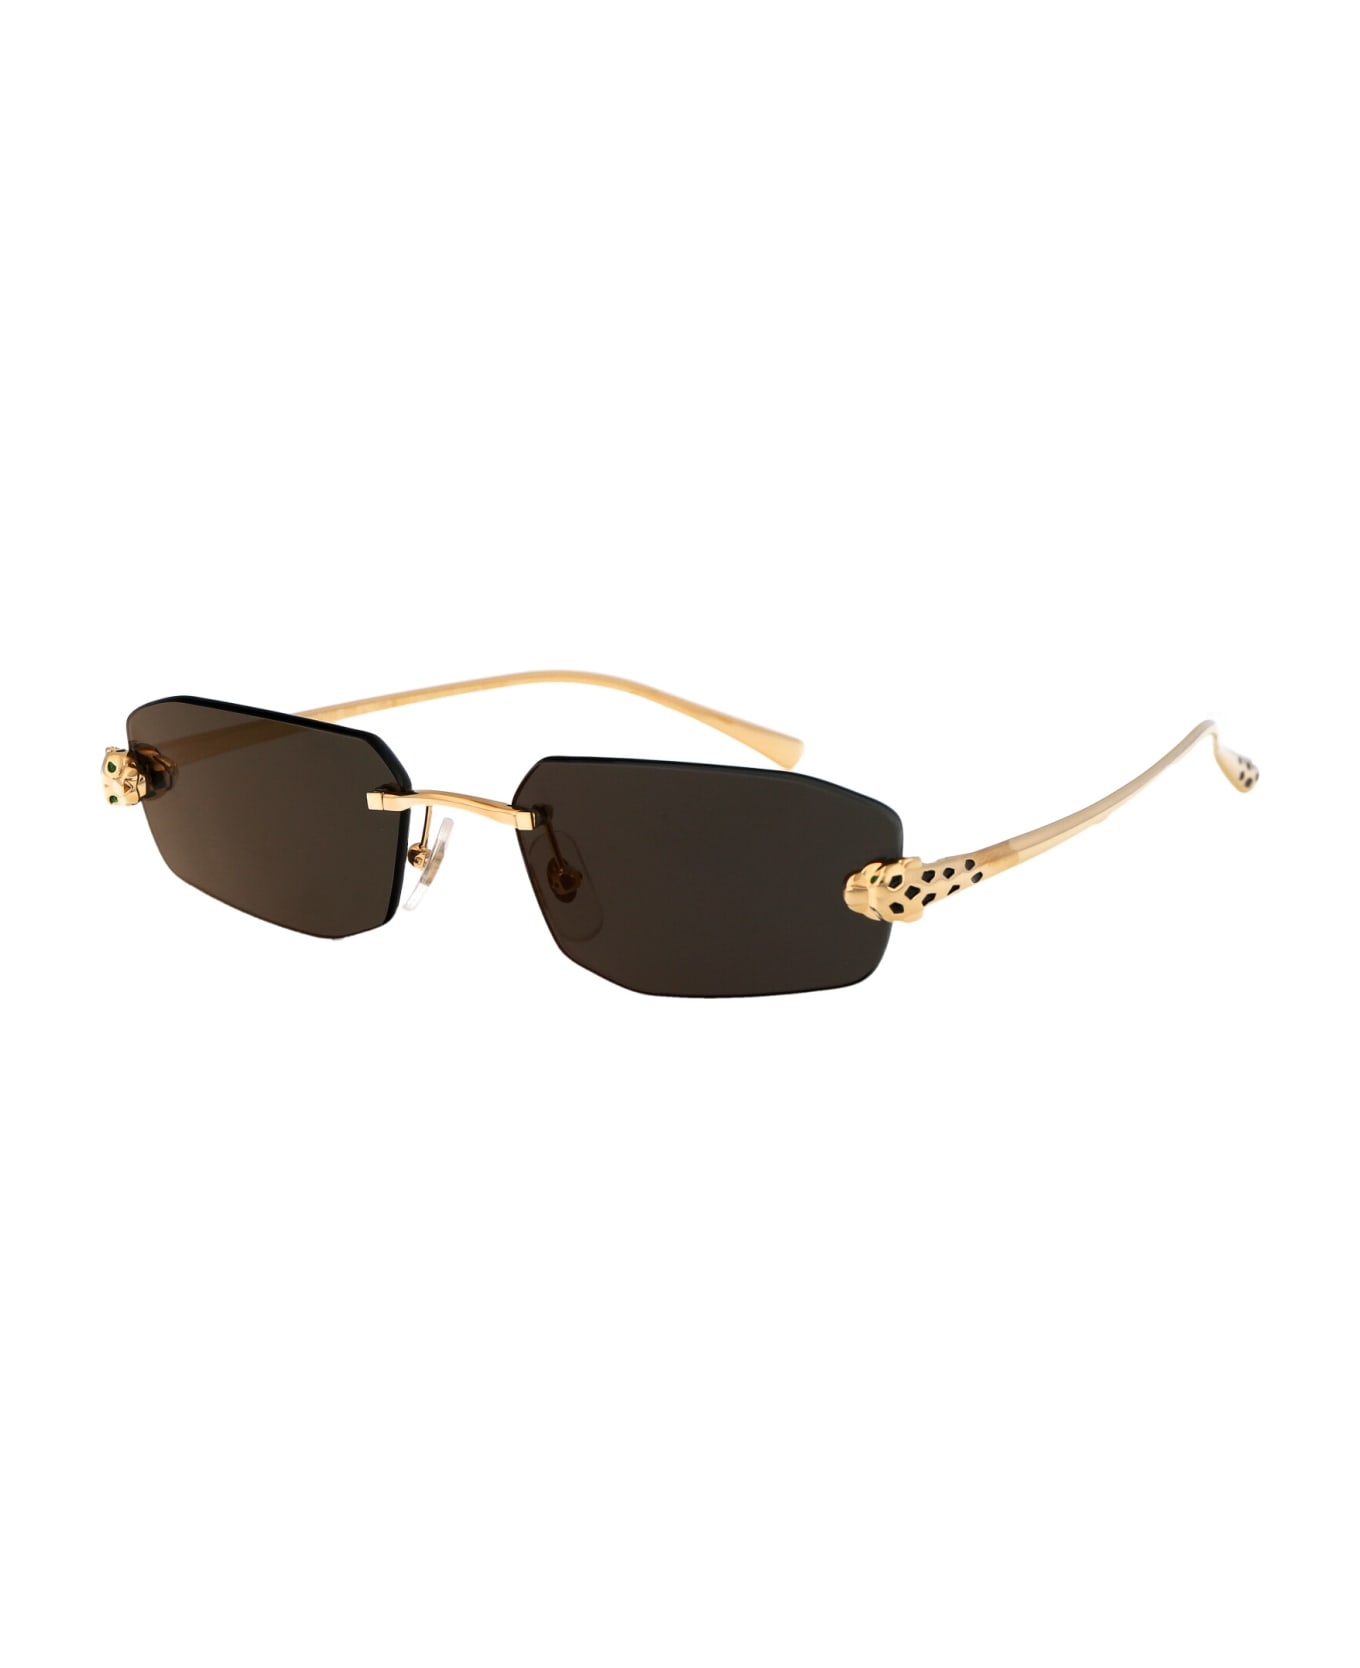 Cartier Eyewear Ct0474s Sunglasses - 001 GOLD GOLD GREY サングラス